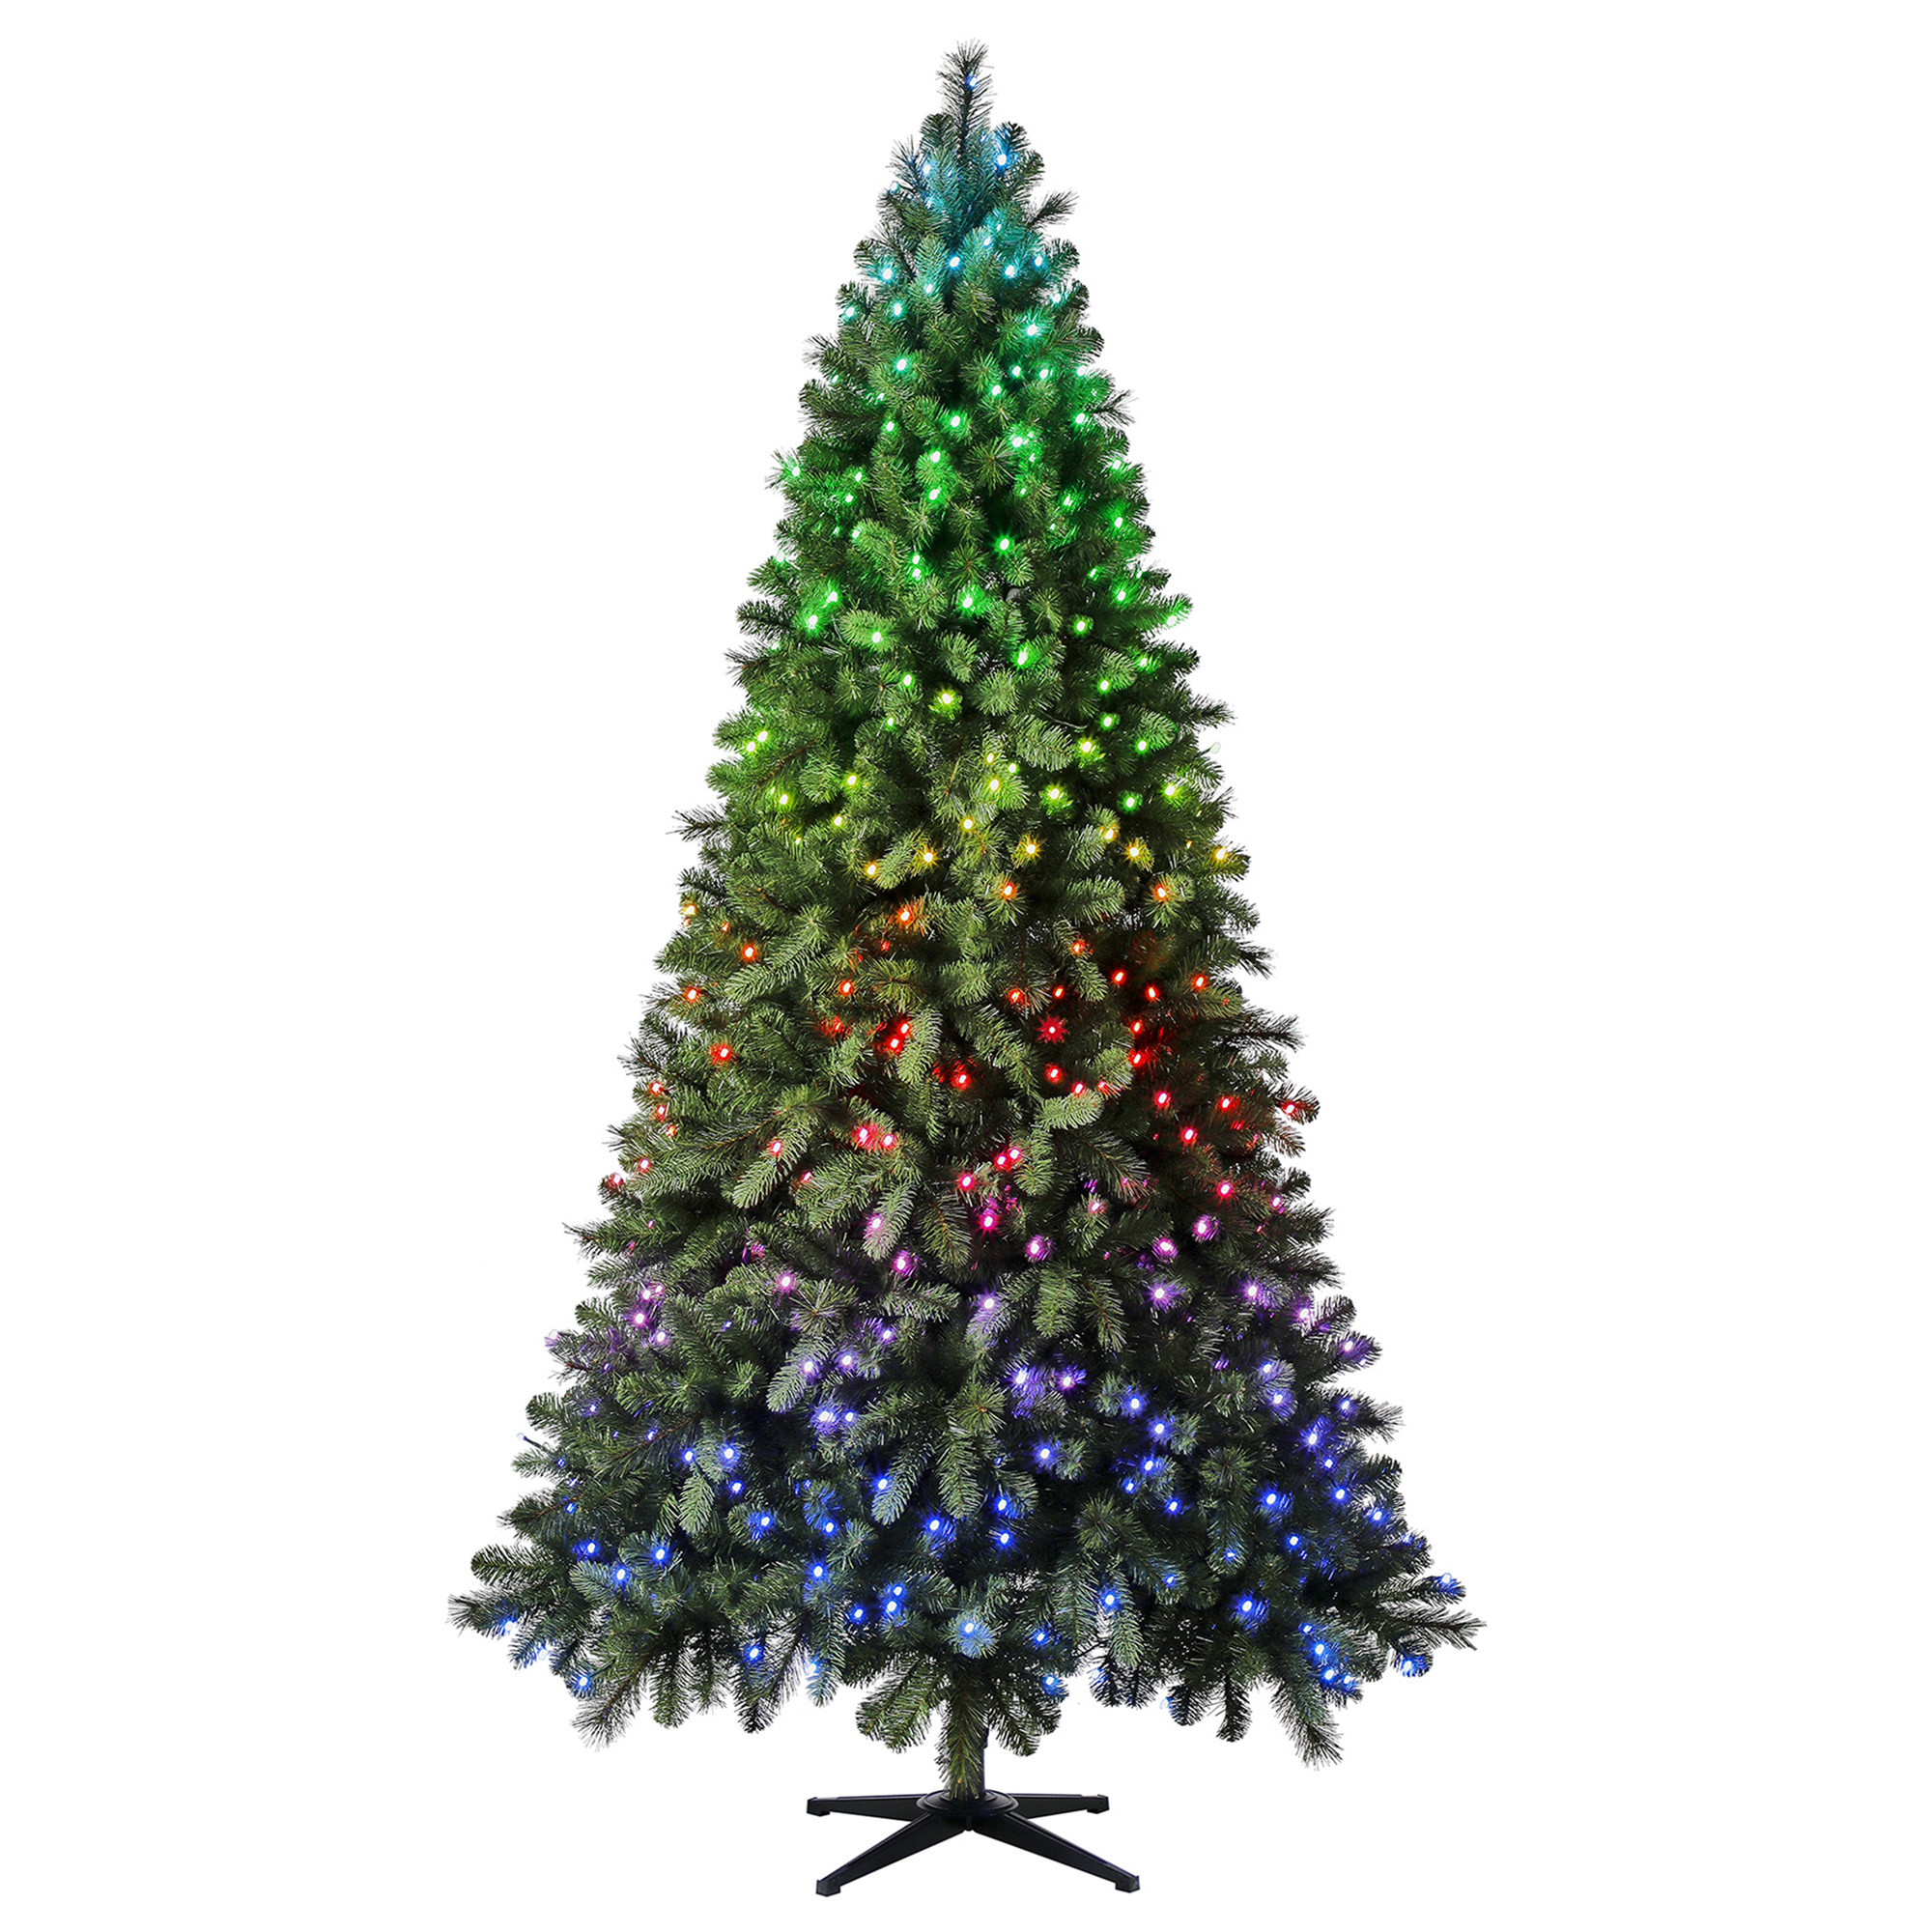 Evergreen Classics Pre-Lit Twinkly Carolina Spruce Artificial Christmas Tree, 7.5' RGB LED Lights Walmart.com Free Shipping $115.00